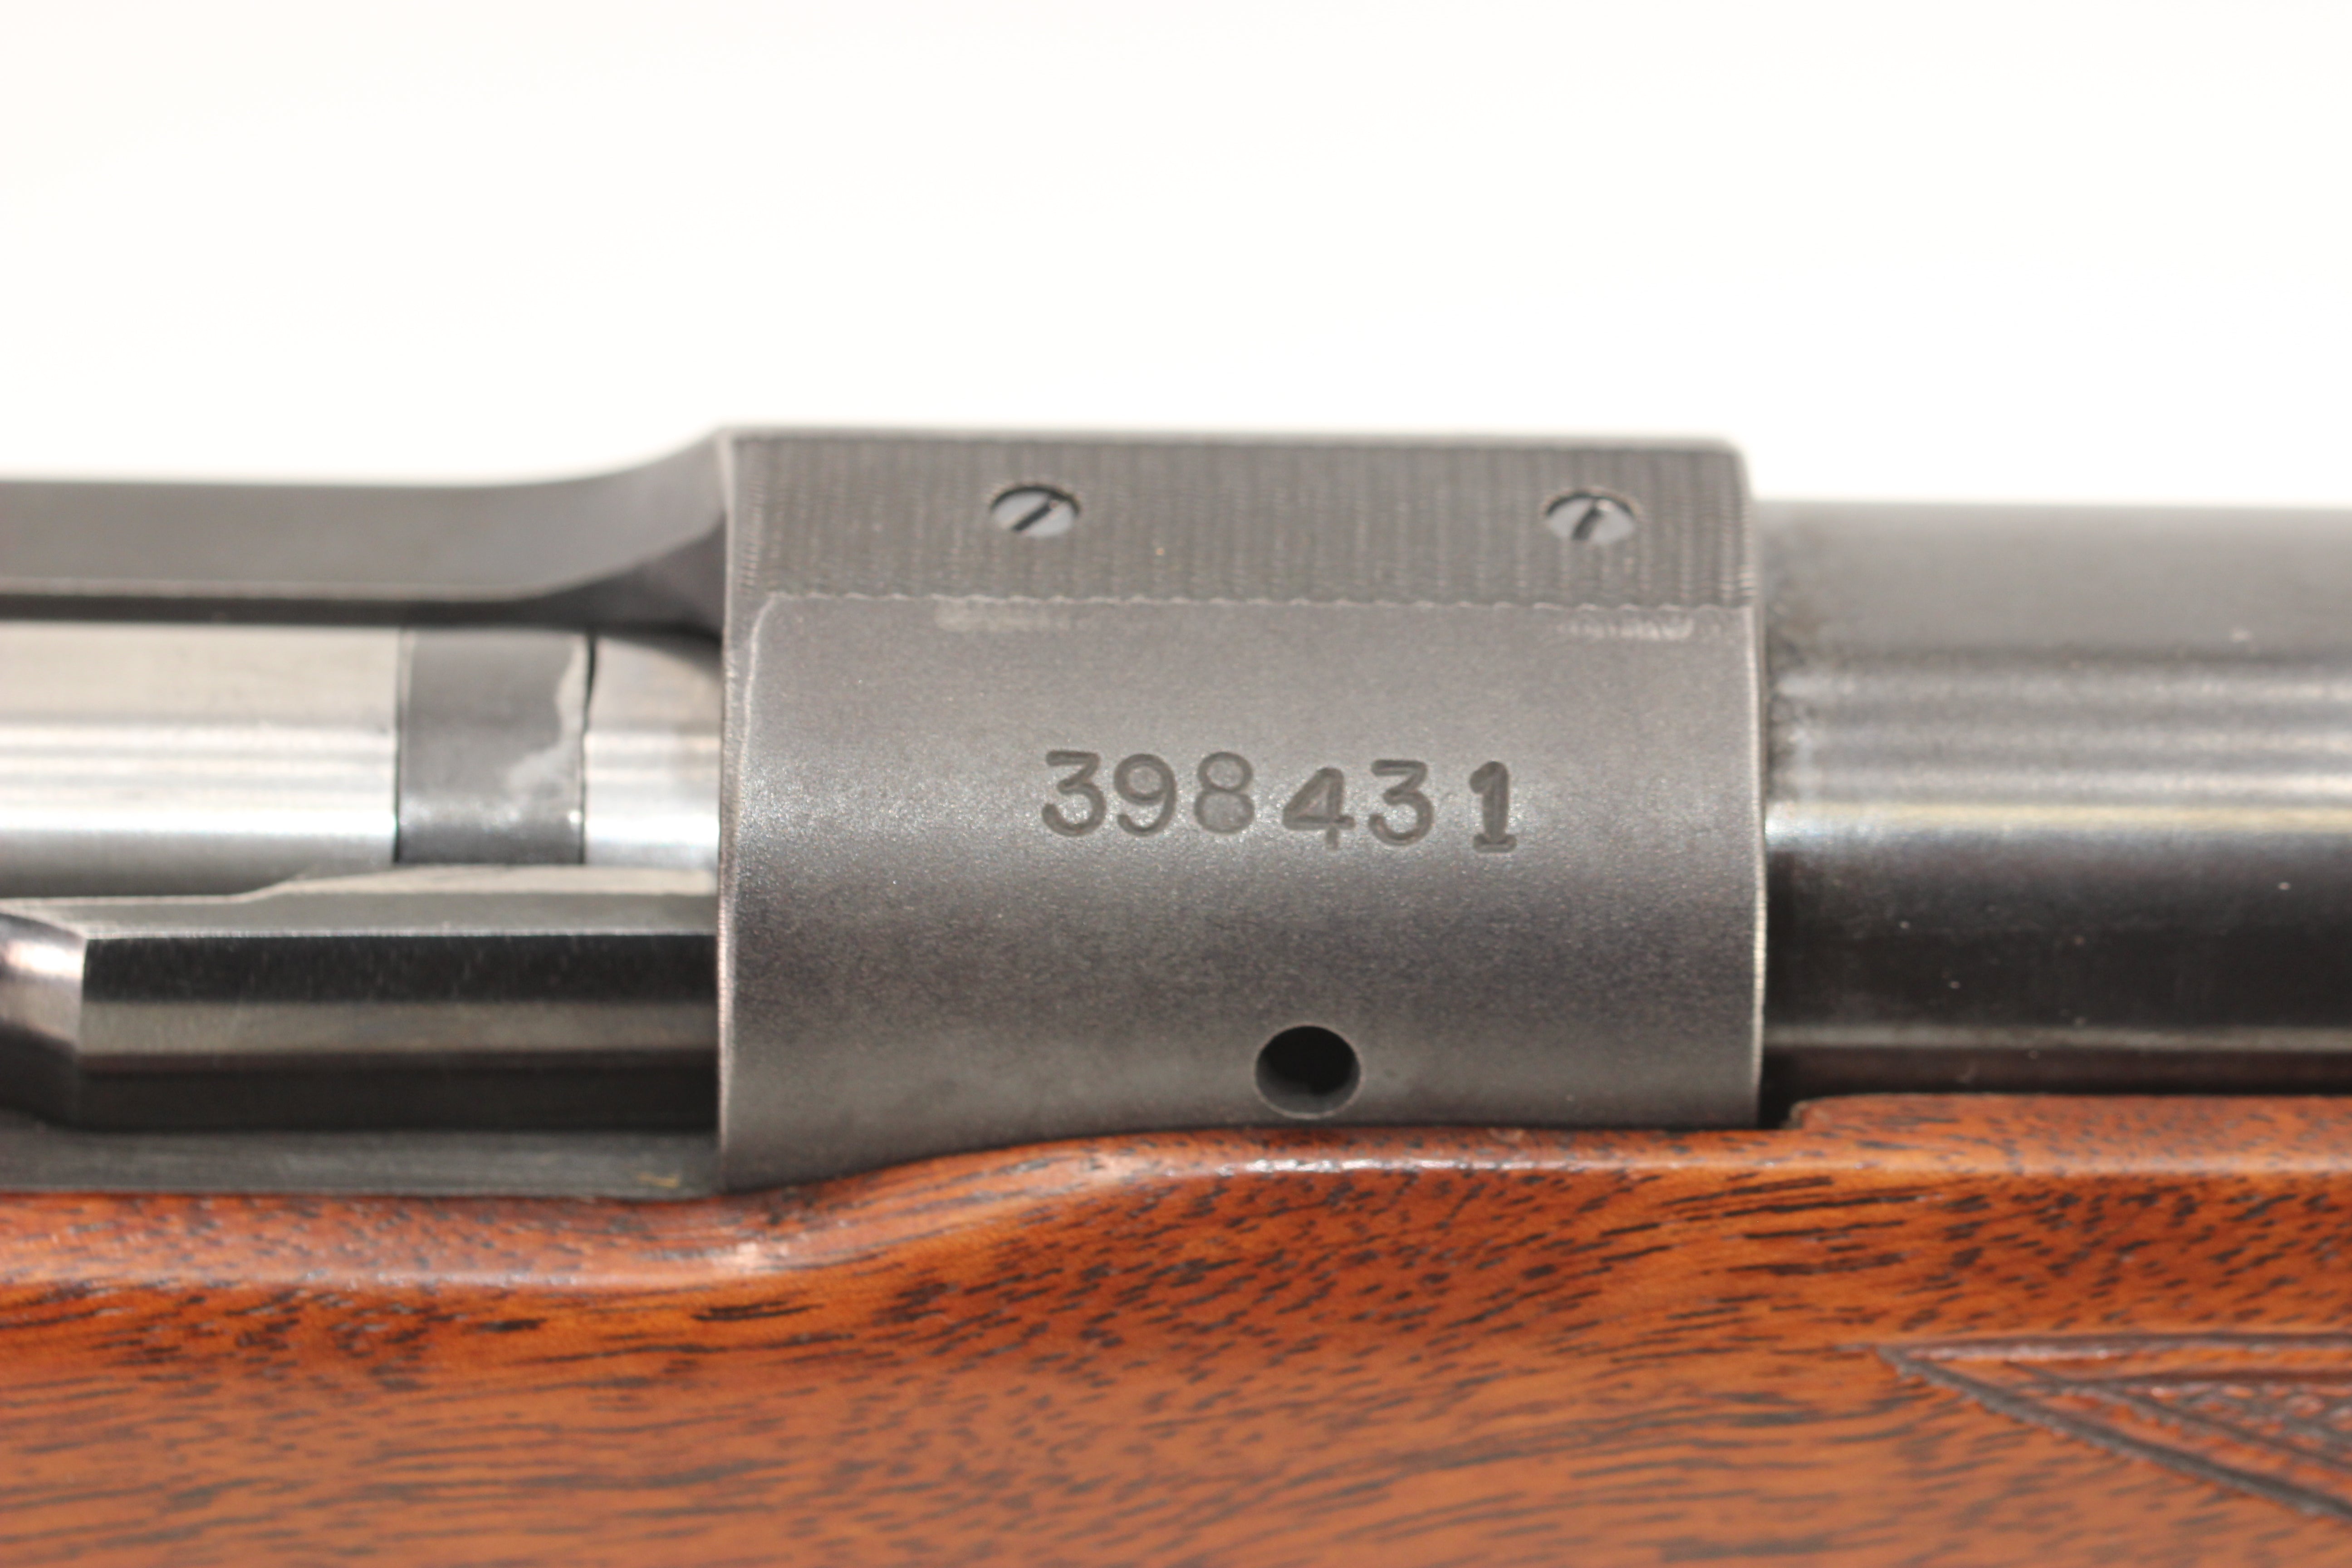 .270 Win Standard Rifle - 1957